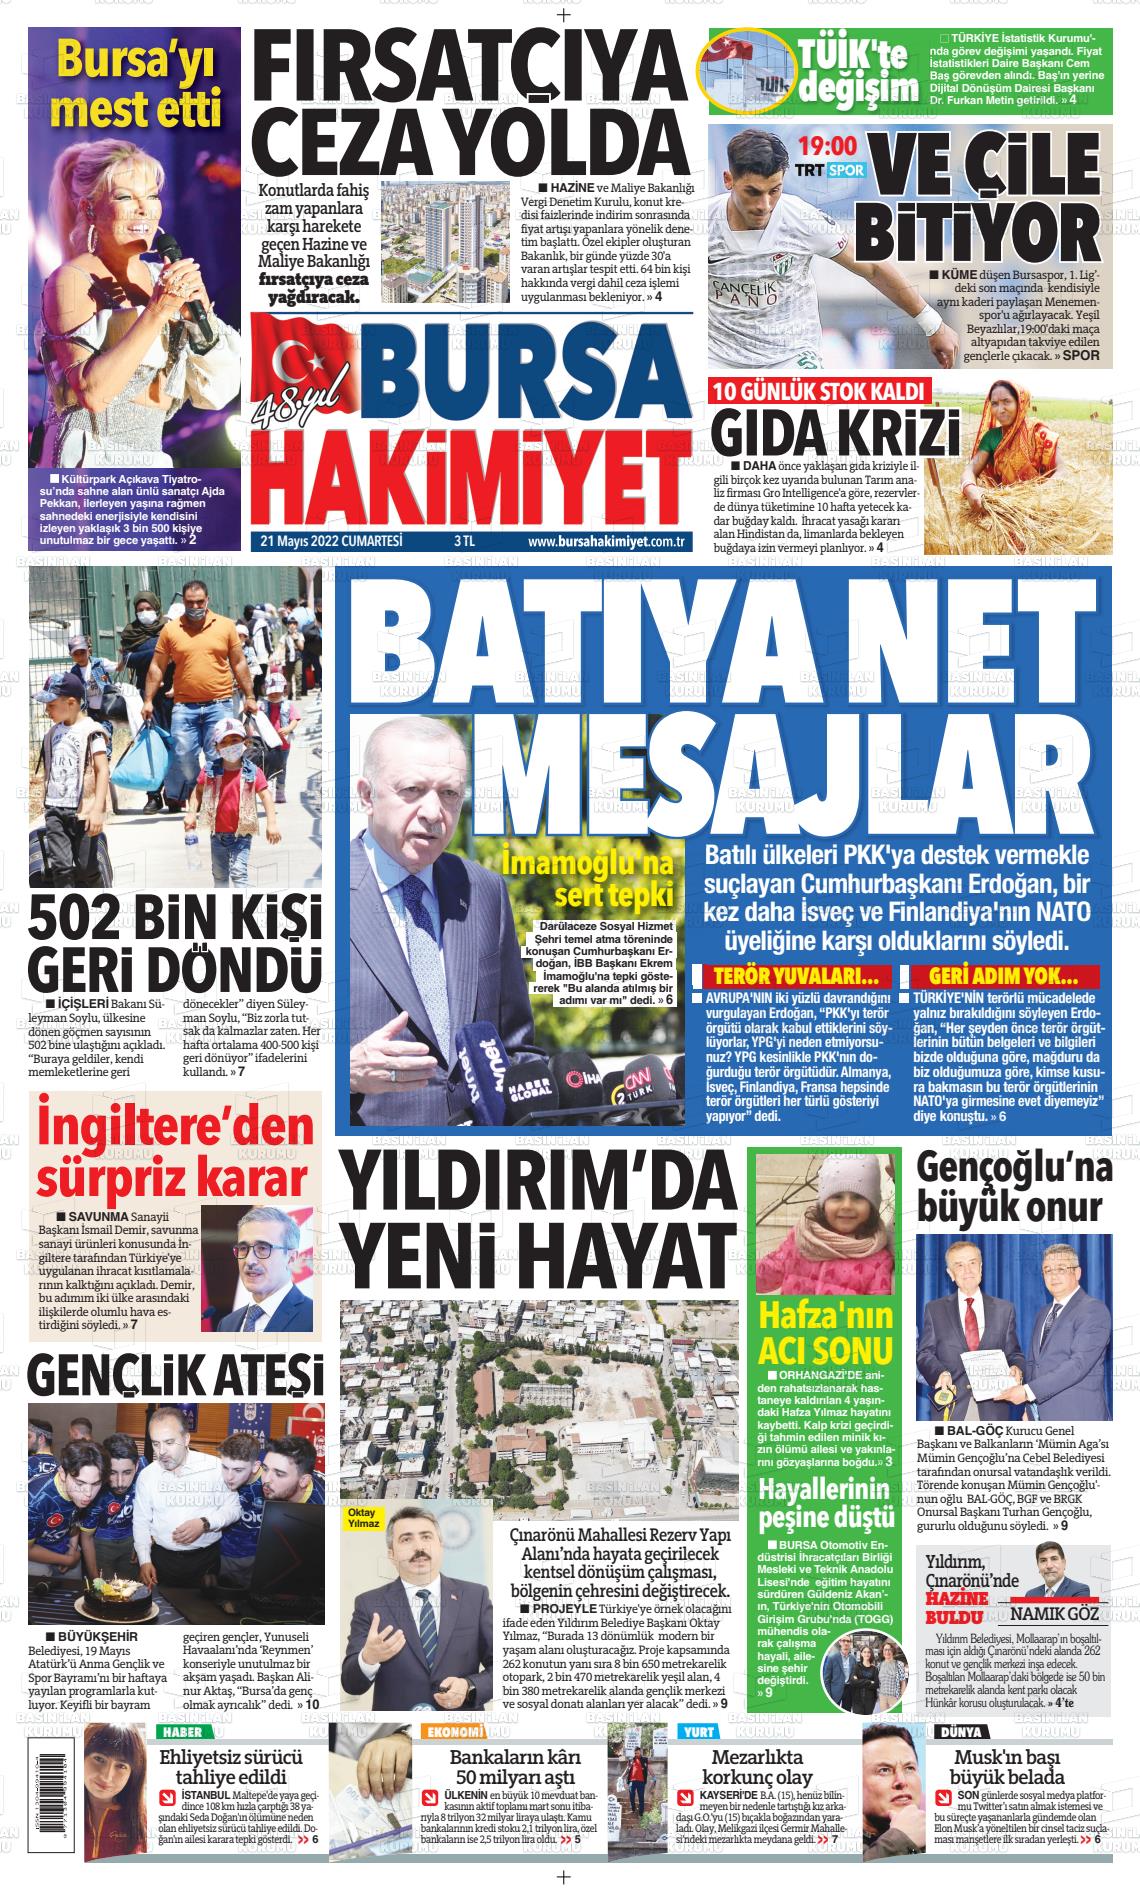 21 Mayıs 2022 Bursa Hakimiyet Gazete Manşeti